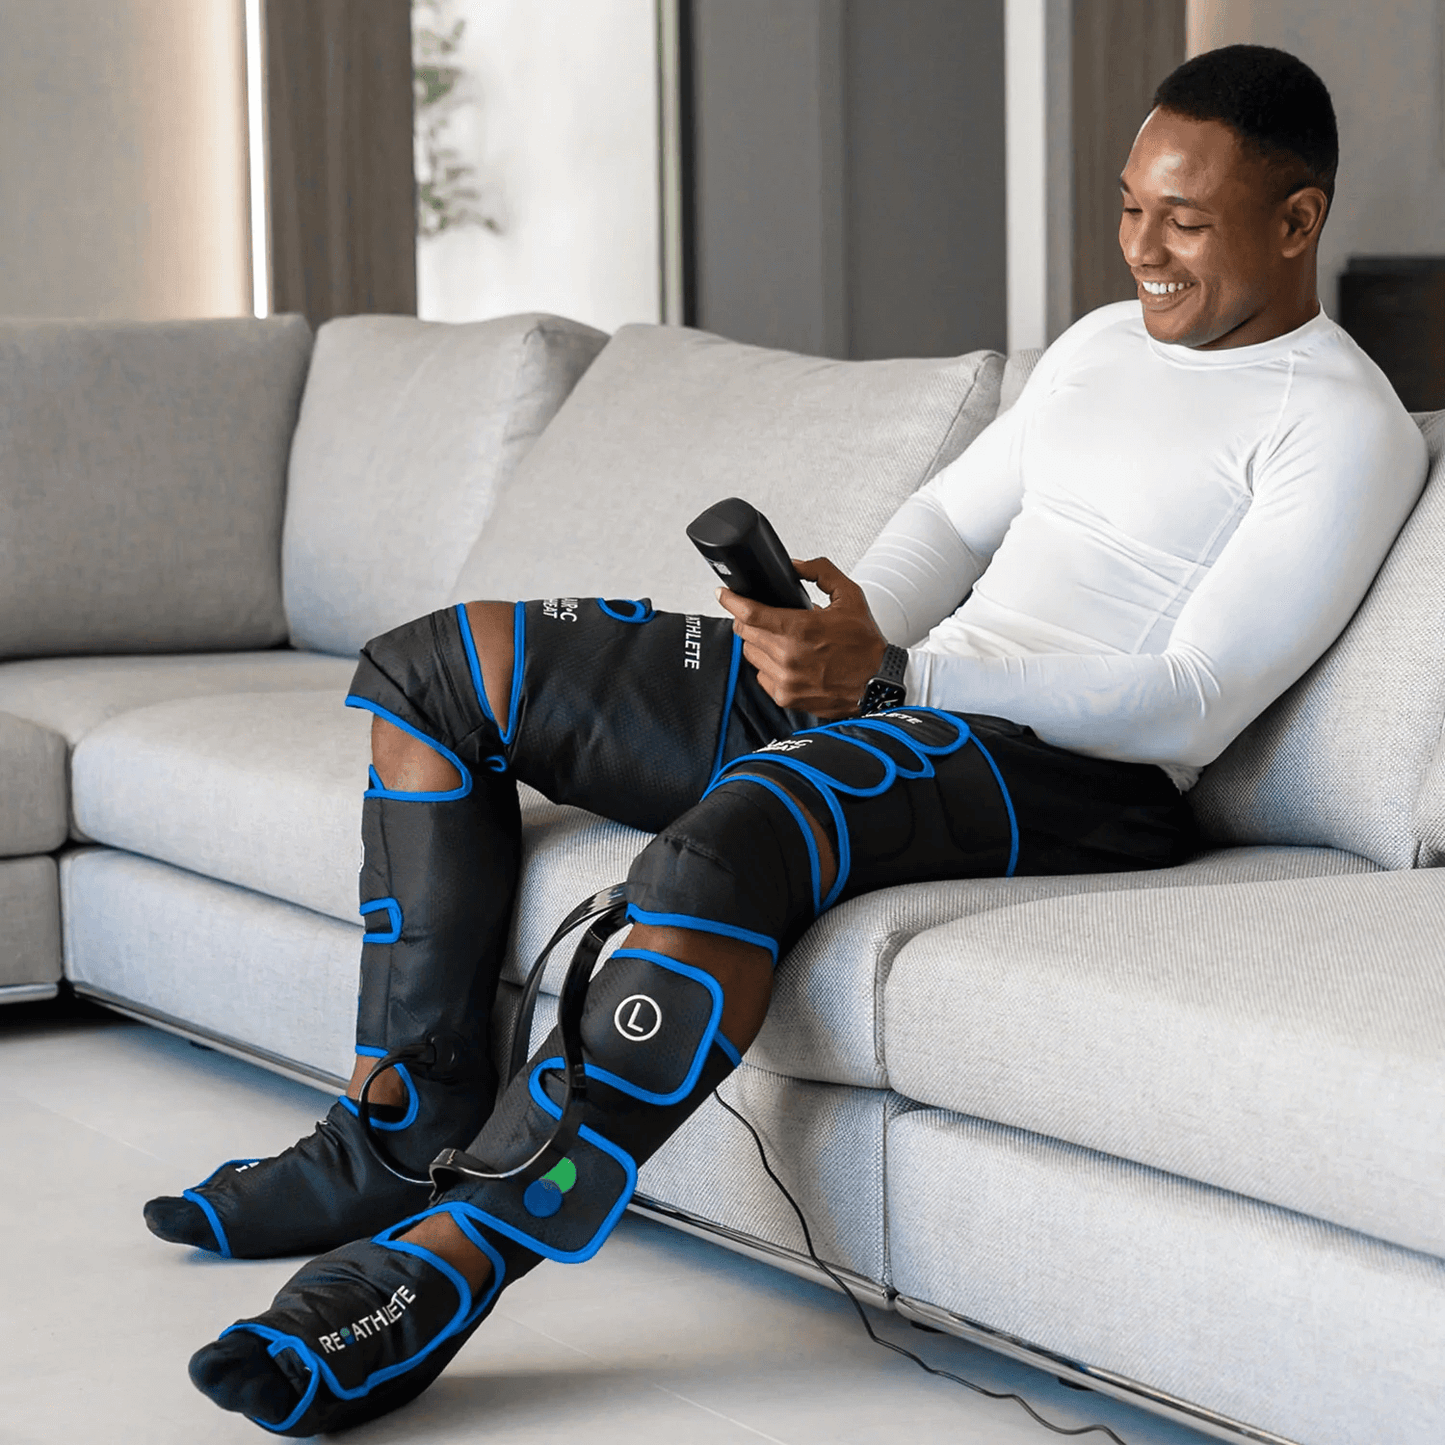 ReAthlete Air C + Heat Full Leg Compression Massager